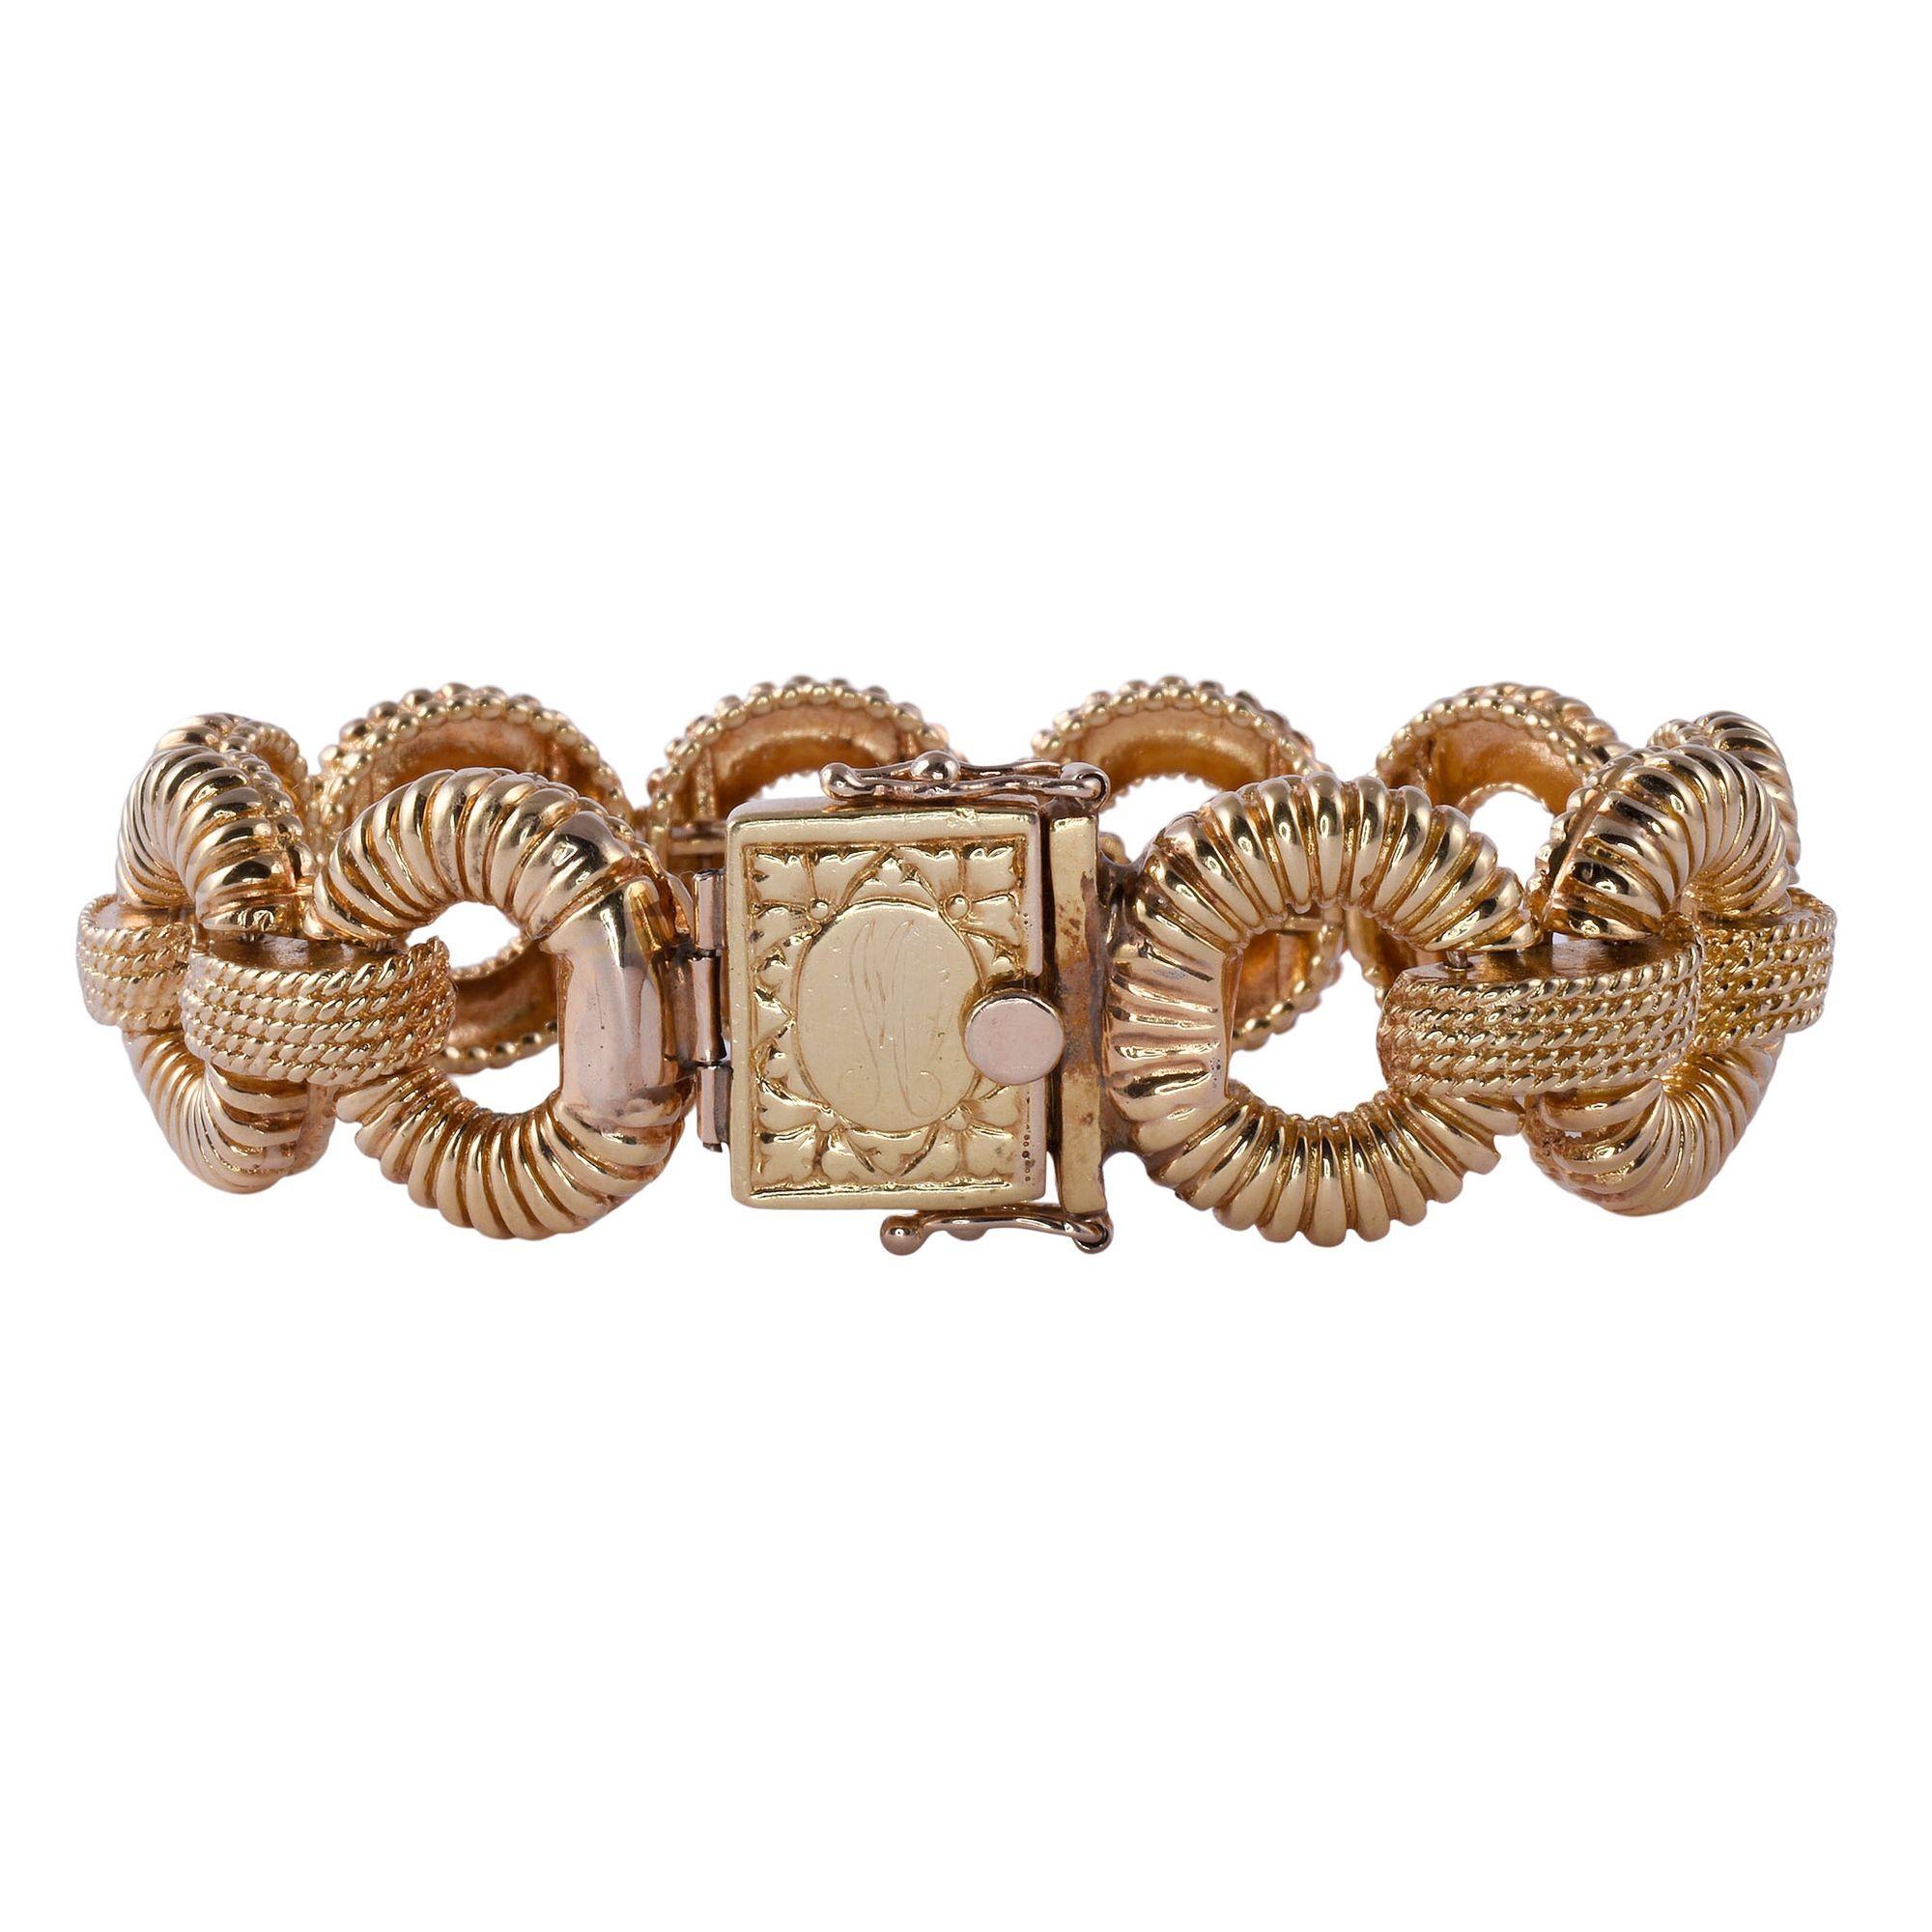 Vintage circular link 18K gold bracelet, circa 1960-70. This vintage bracelet features scalloped circular links crafted in 18 karat yellow gold. The 18K link bracelet weighs 77.1 grams. [KIMH 577]

Dimensions
7.625